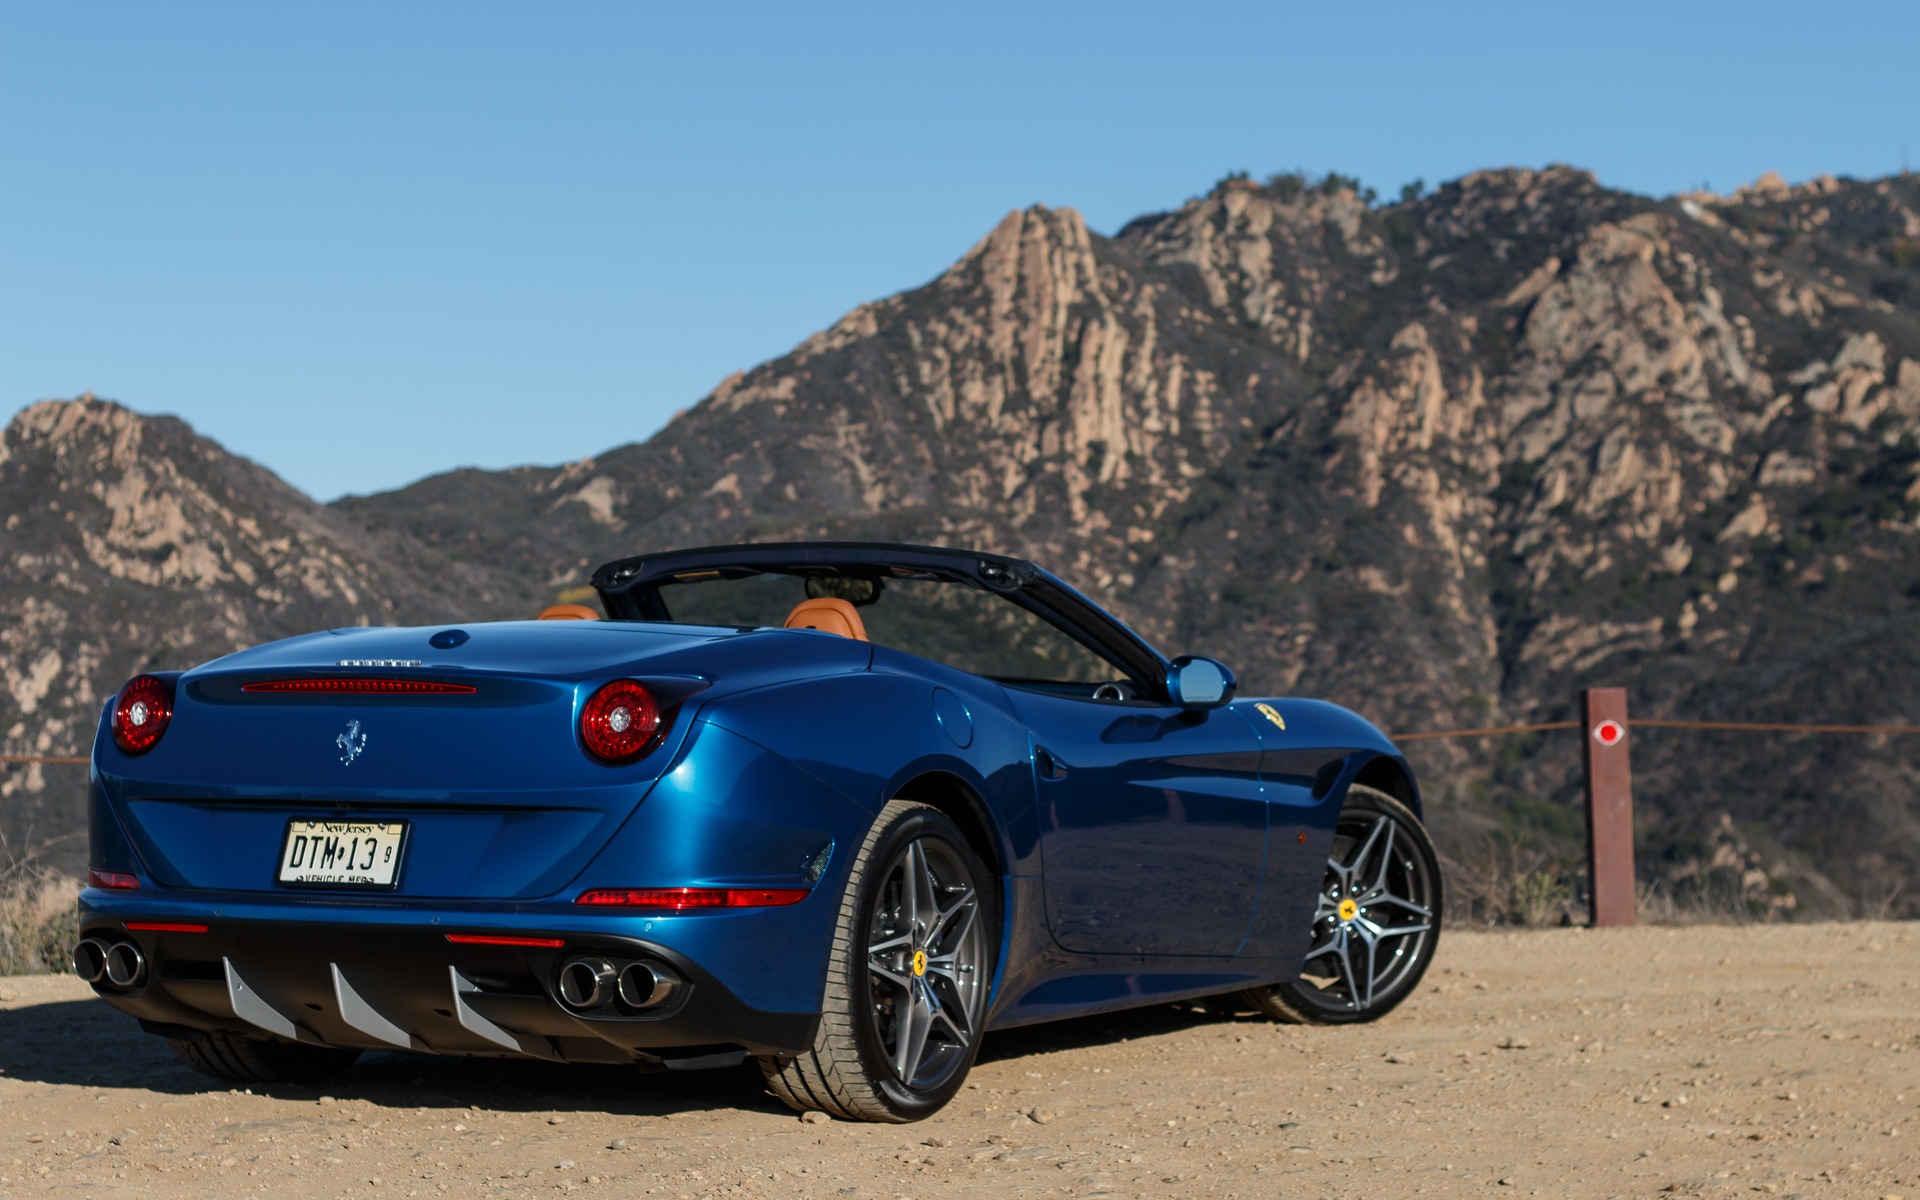 The 2015 Ferrari California T's lines are more angular than before